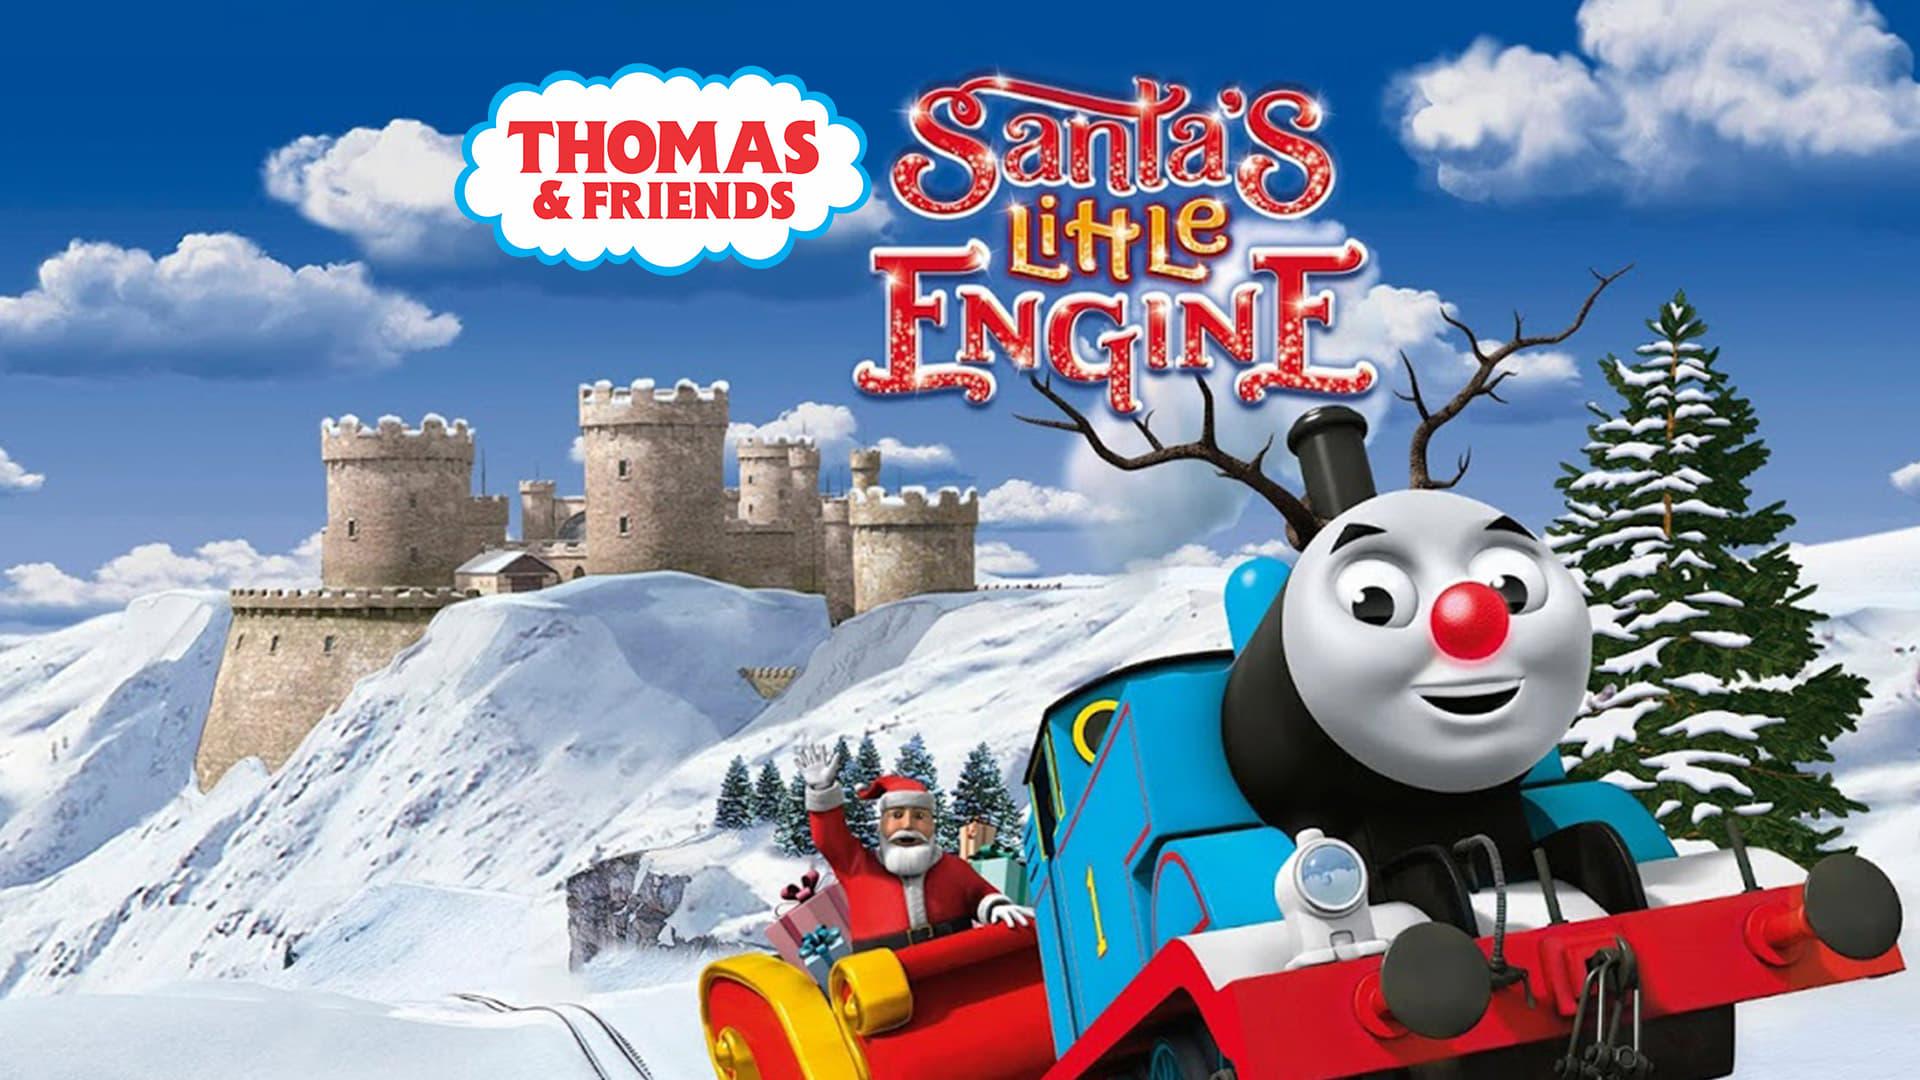 Thomas & Friends: Santa's Little Engine backdrop